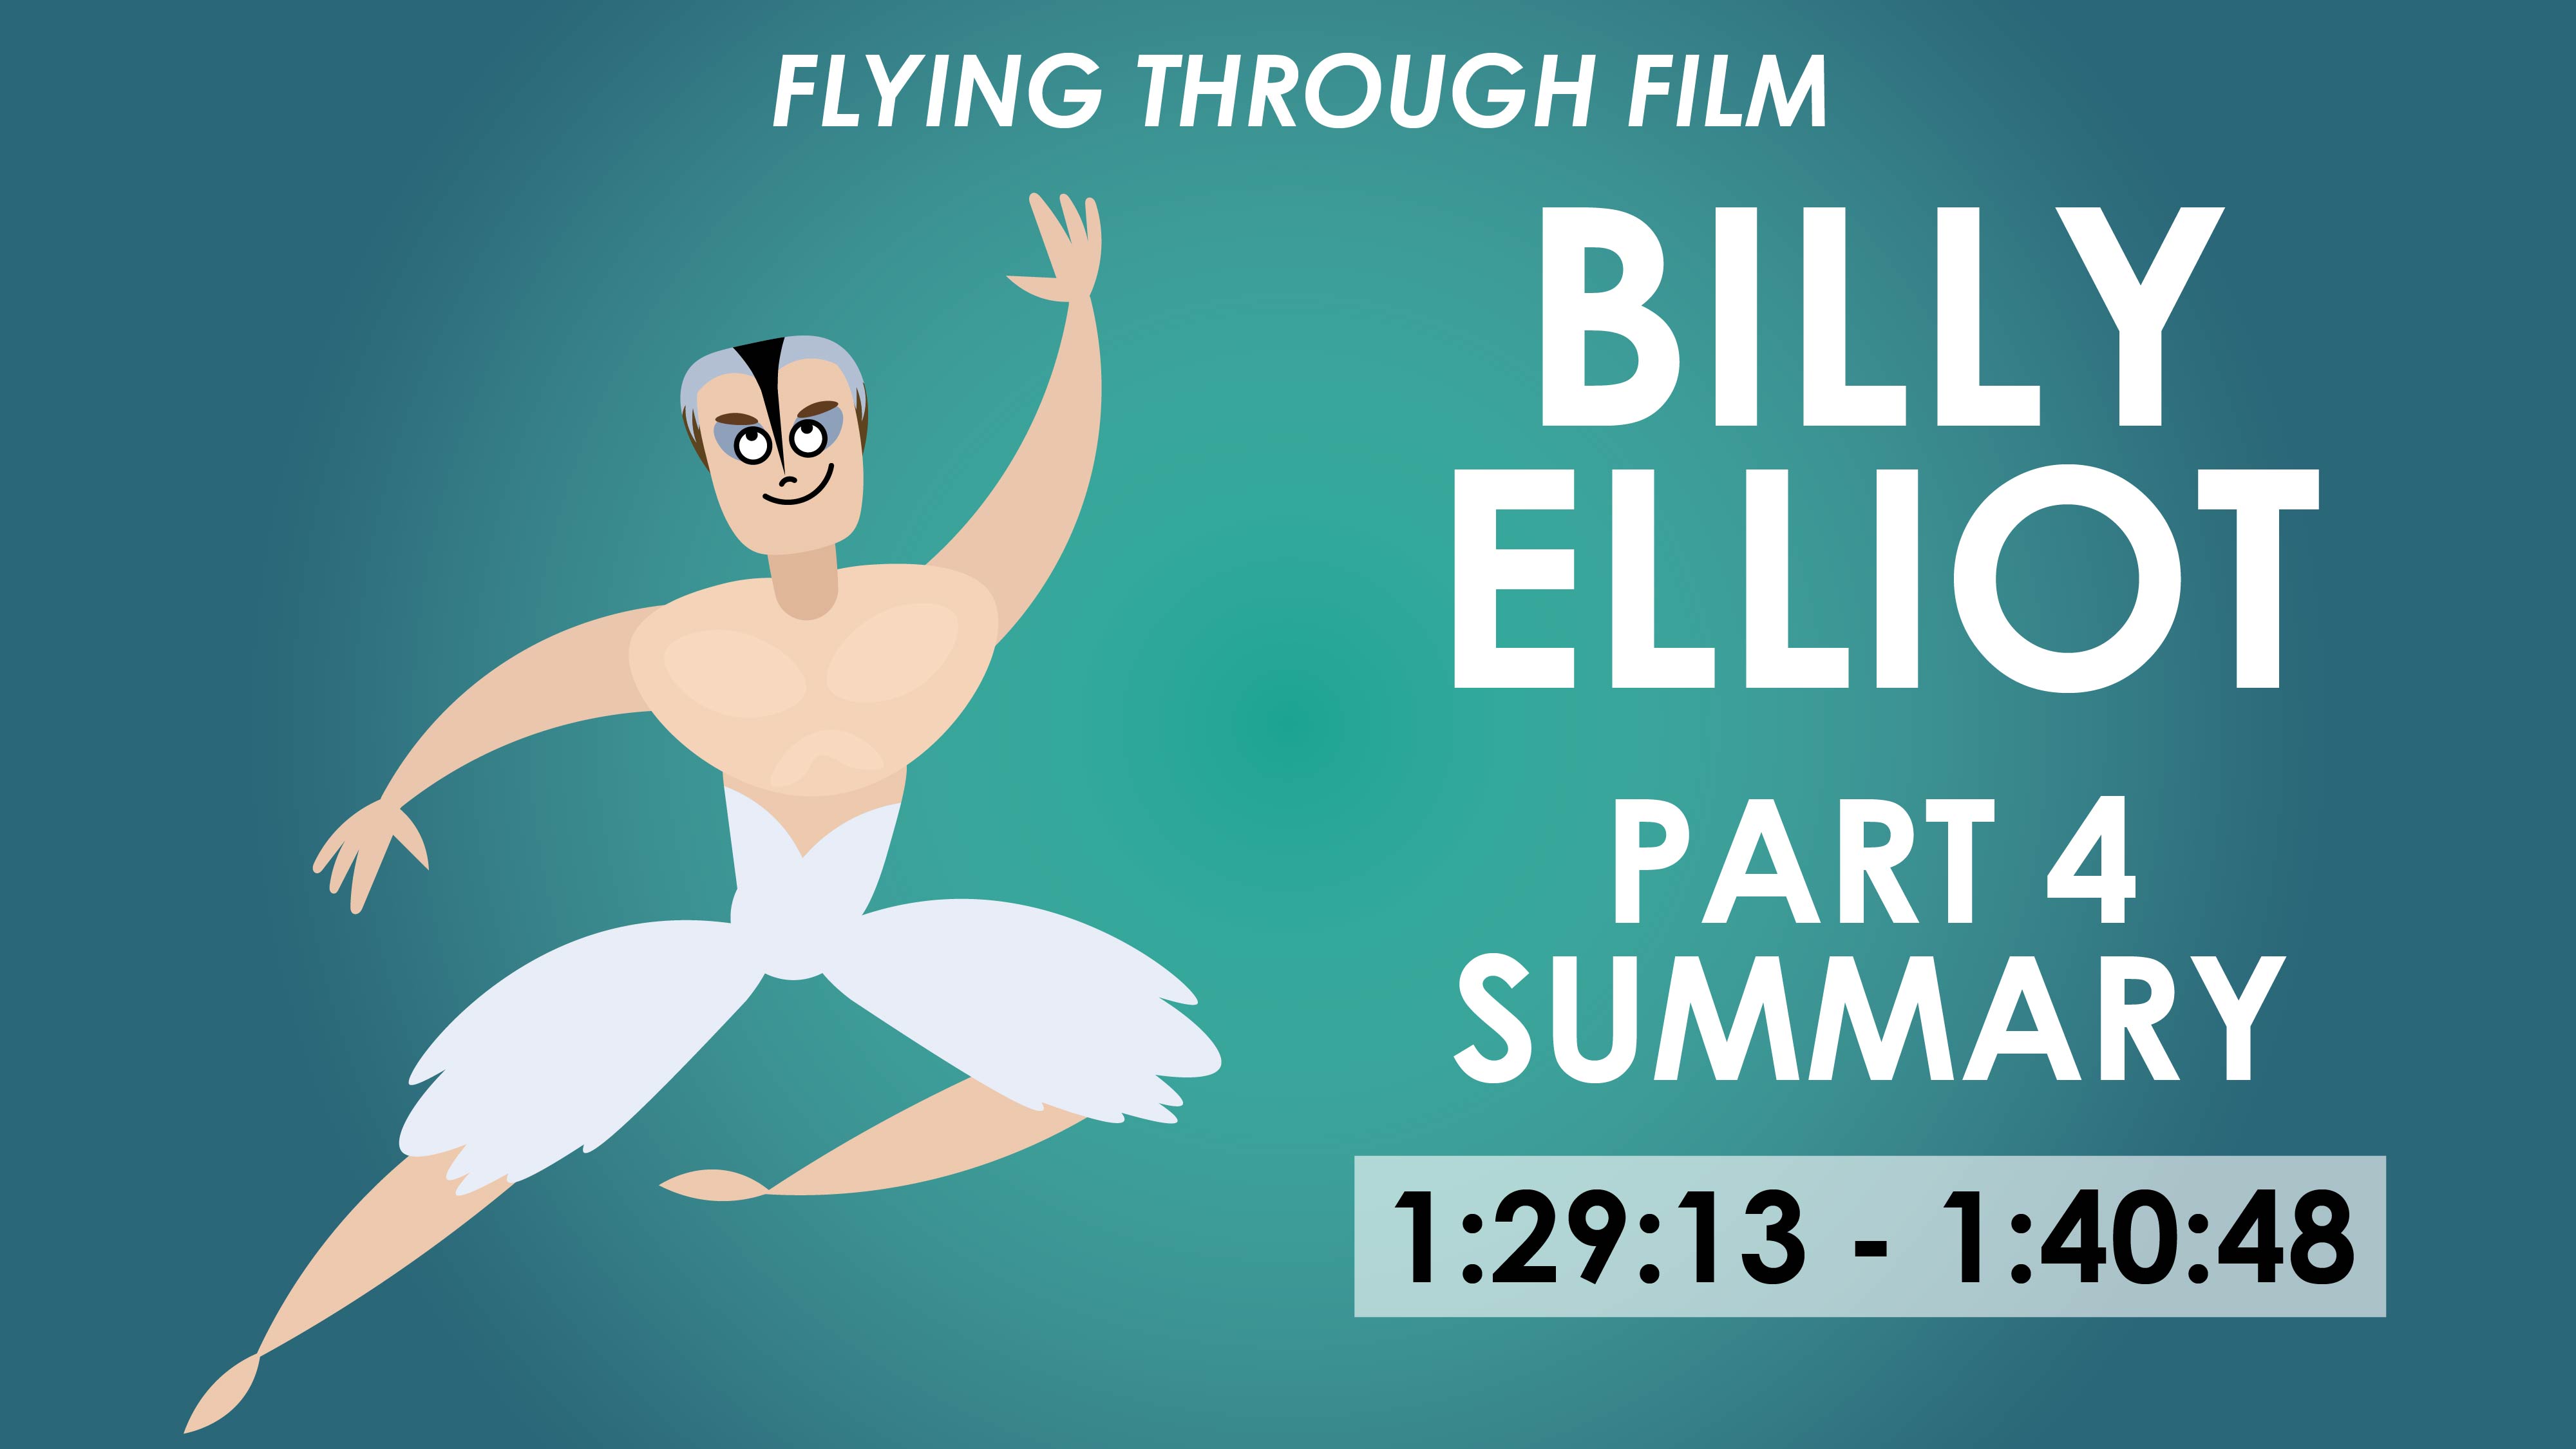 Billy Elliot - Part 4 Summary - Flying Through Film Series